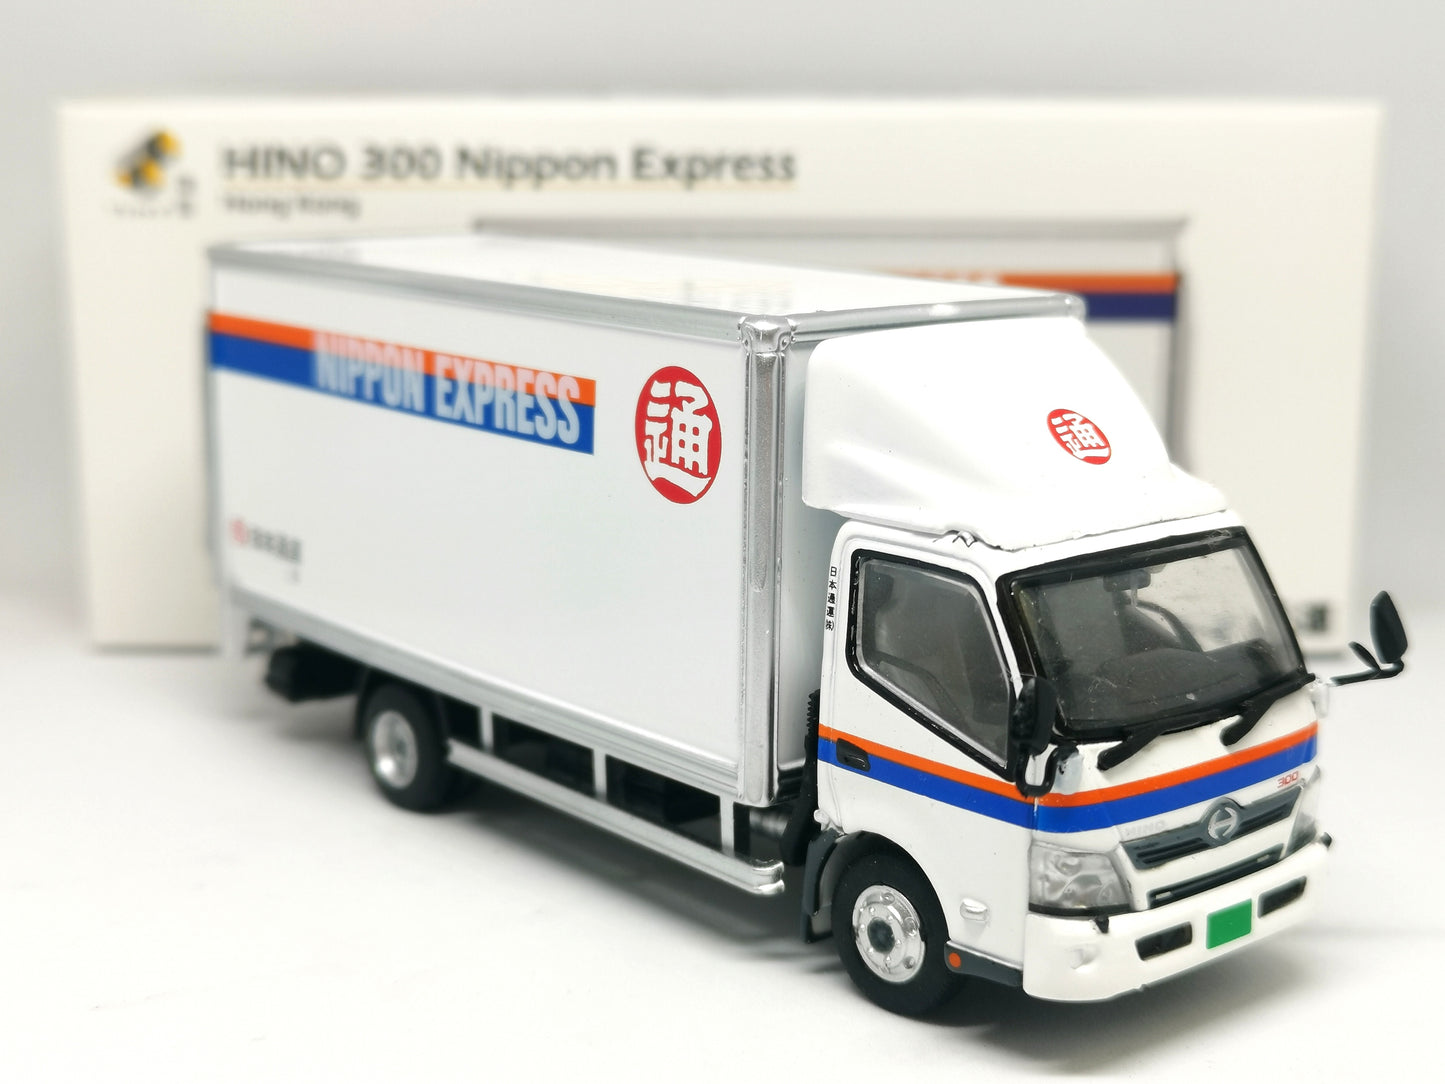 Tiny Hino 300 Nippon Express 1:64 Scale